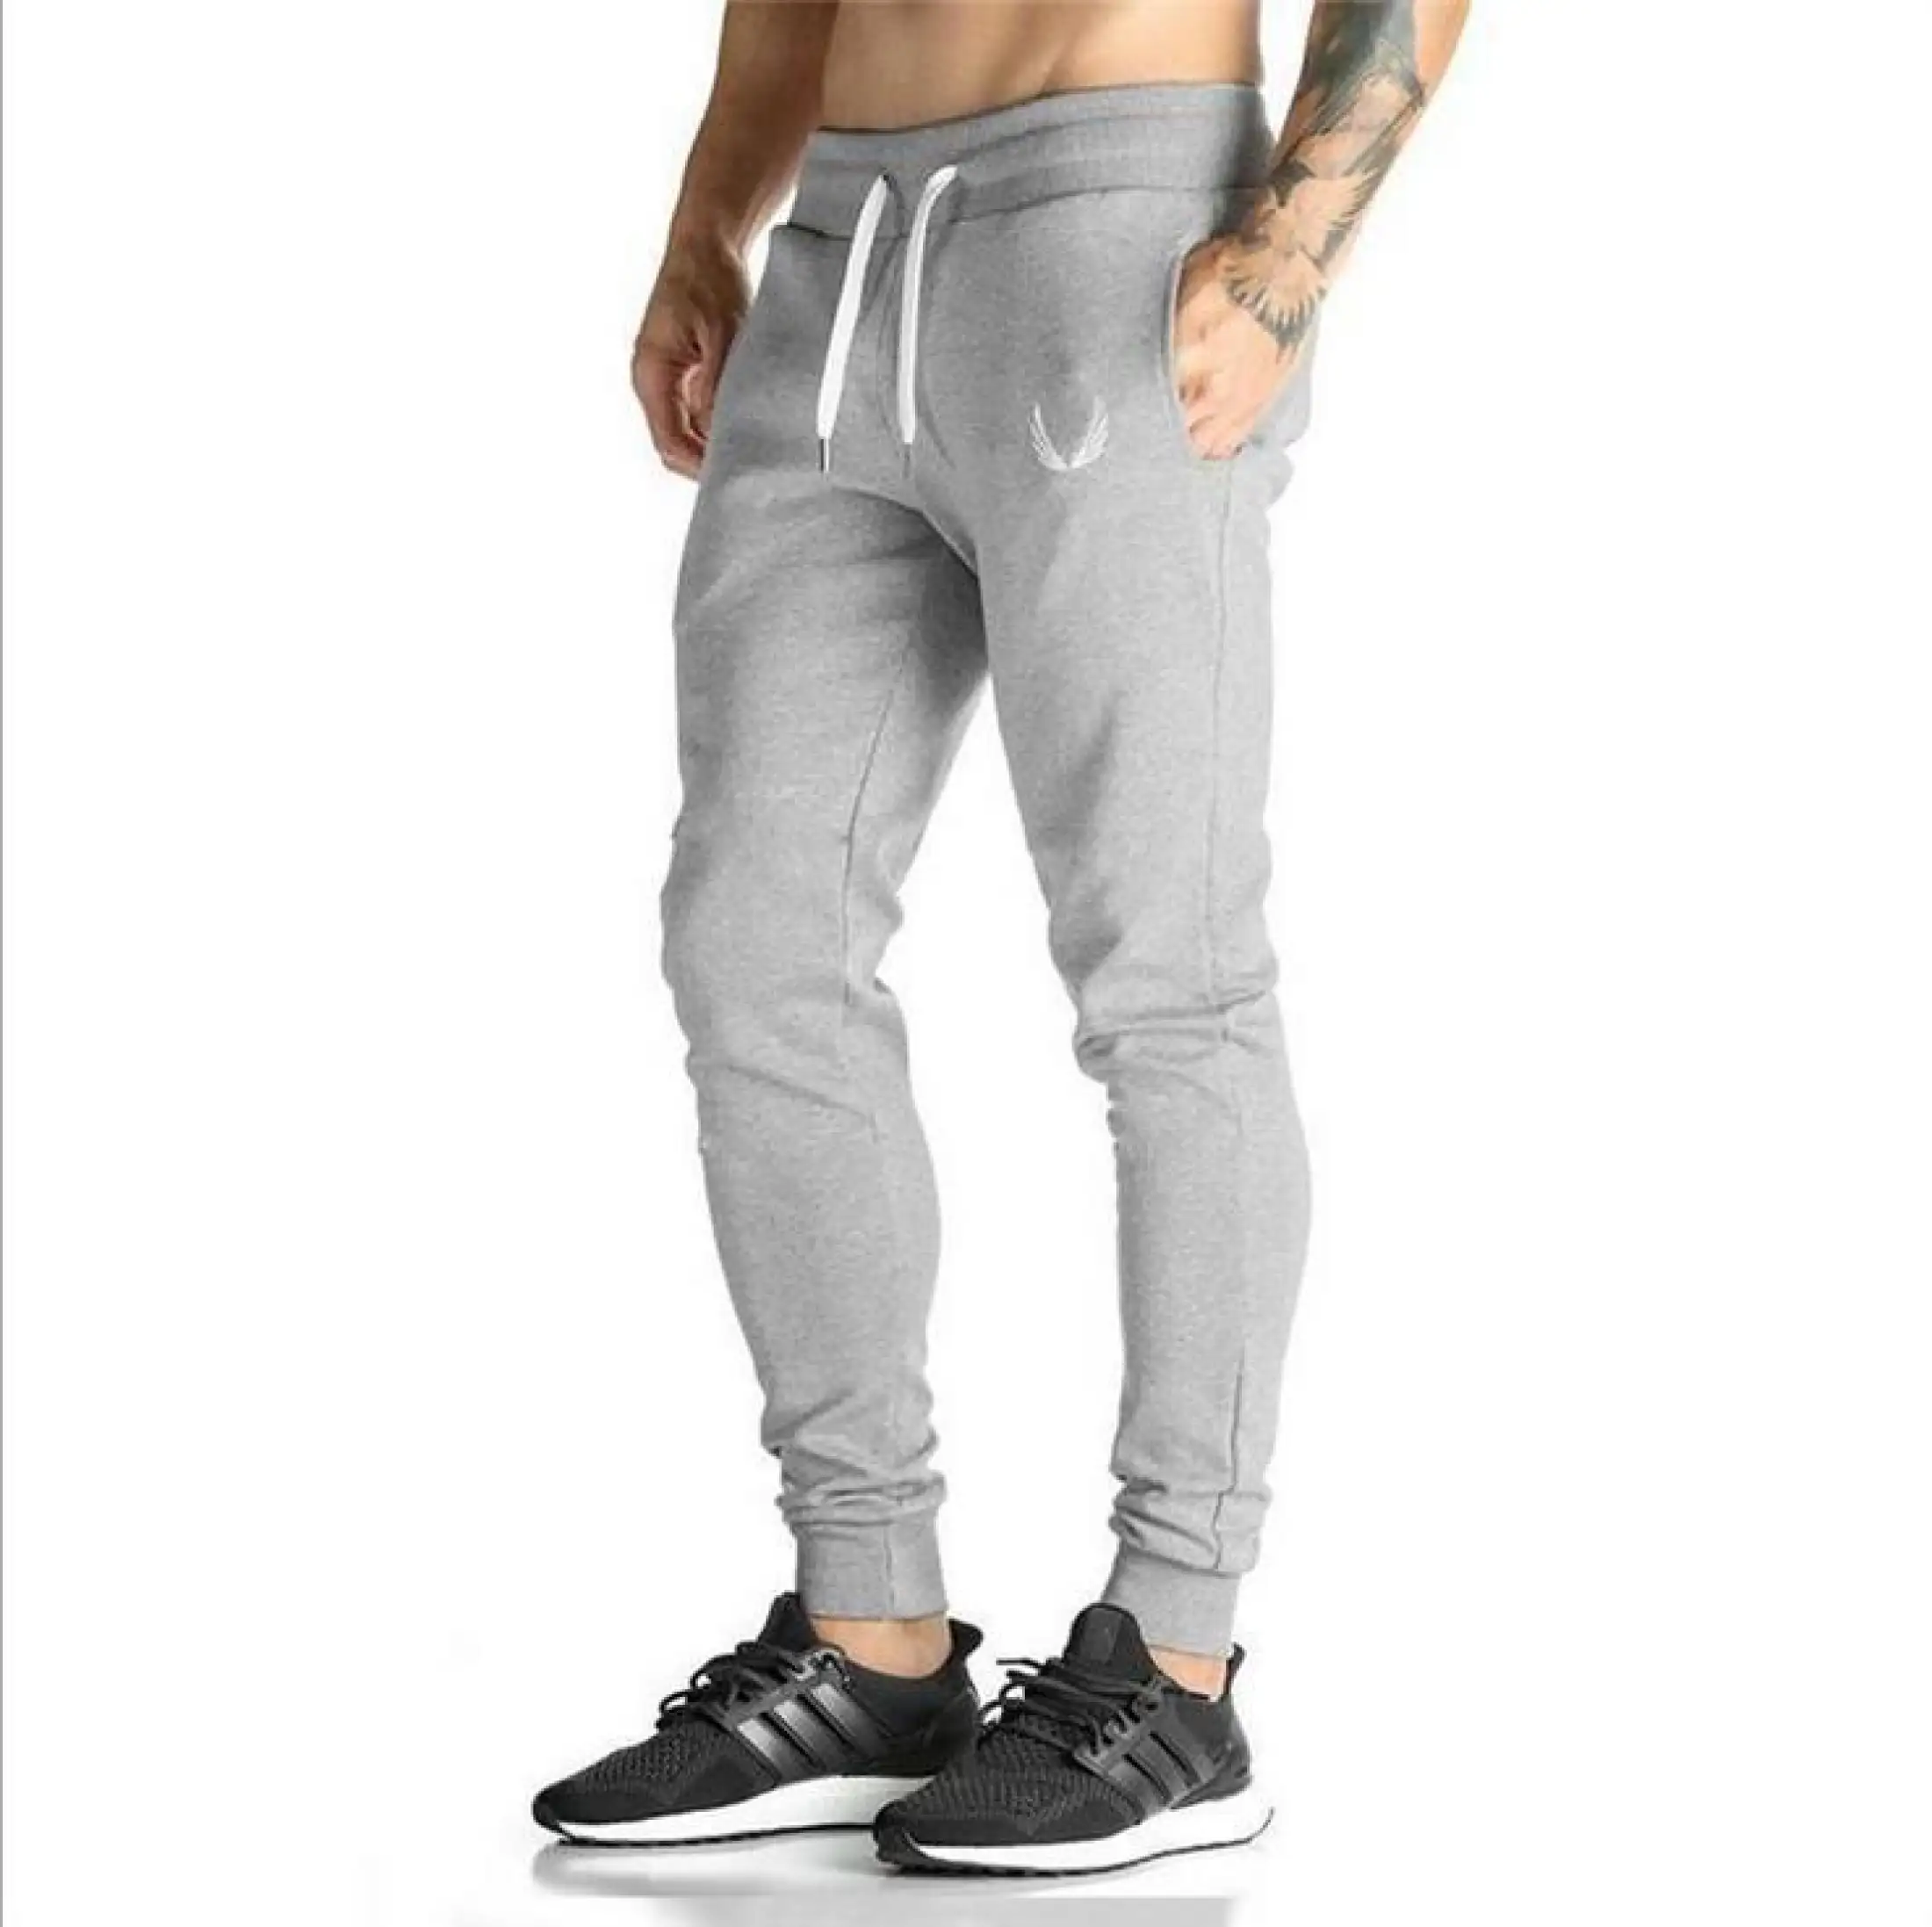 grey pants skinny